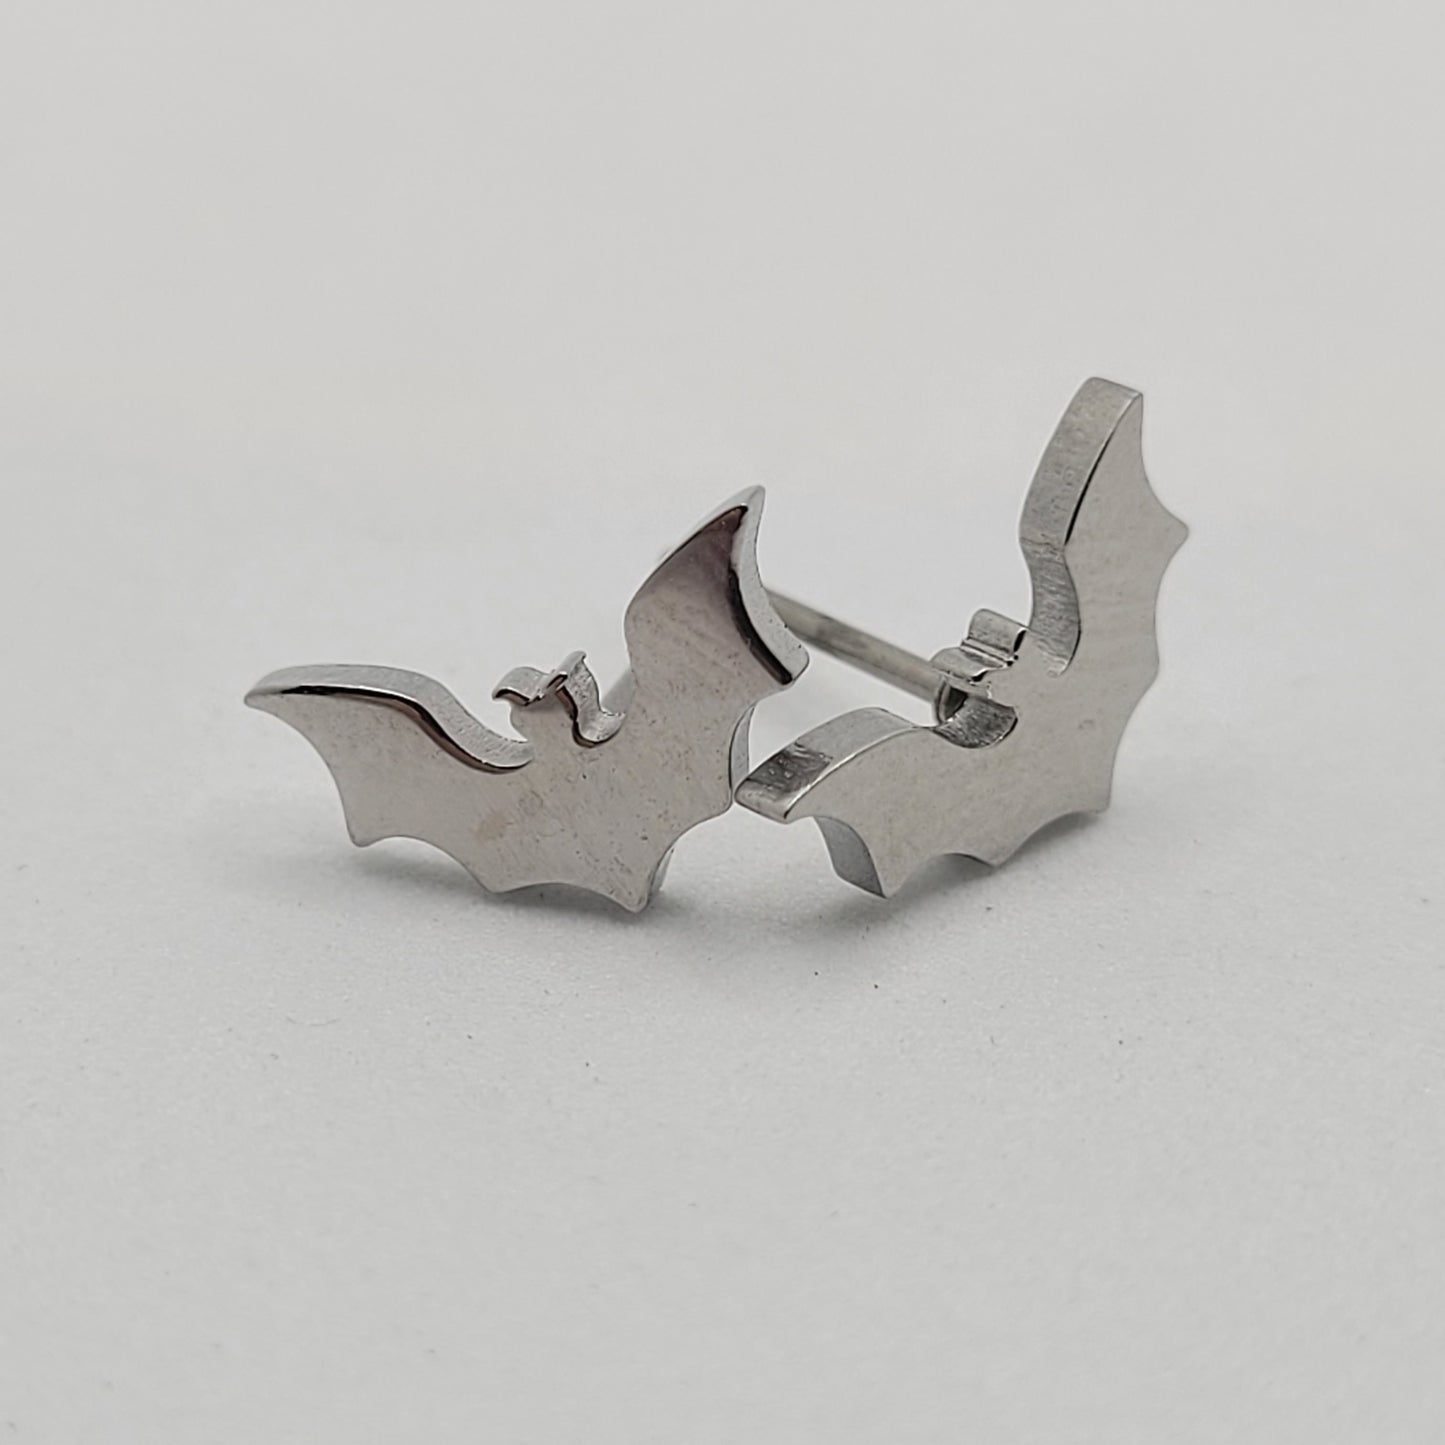 Mini Bat Stud Earrings